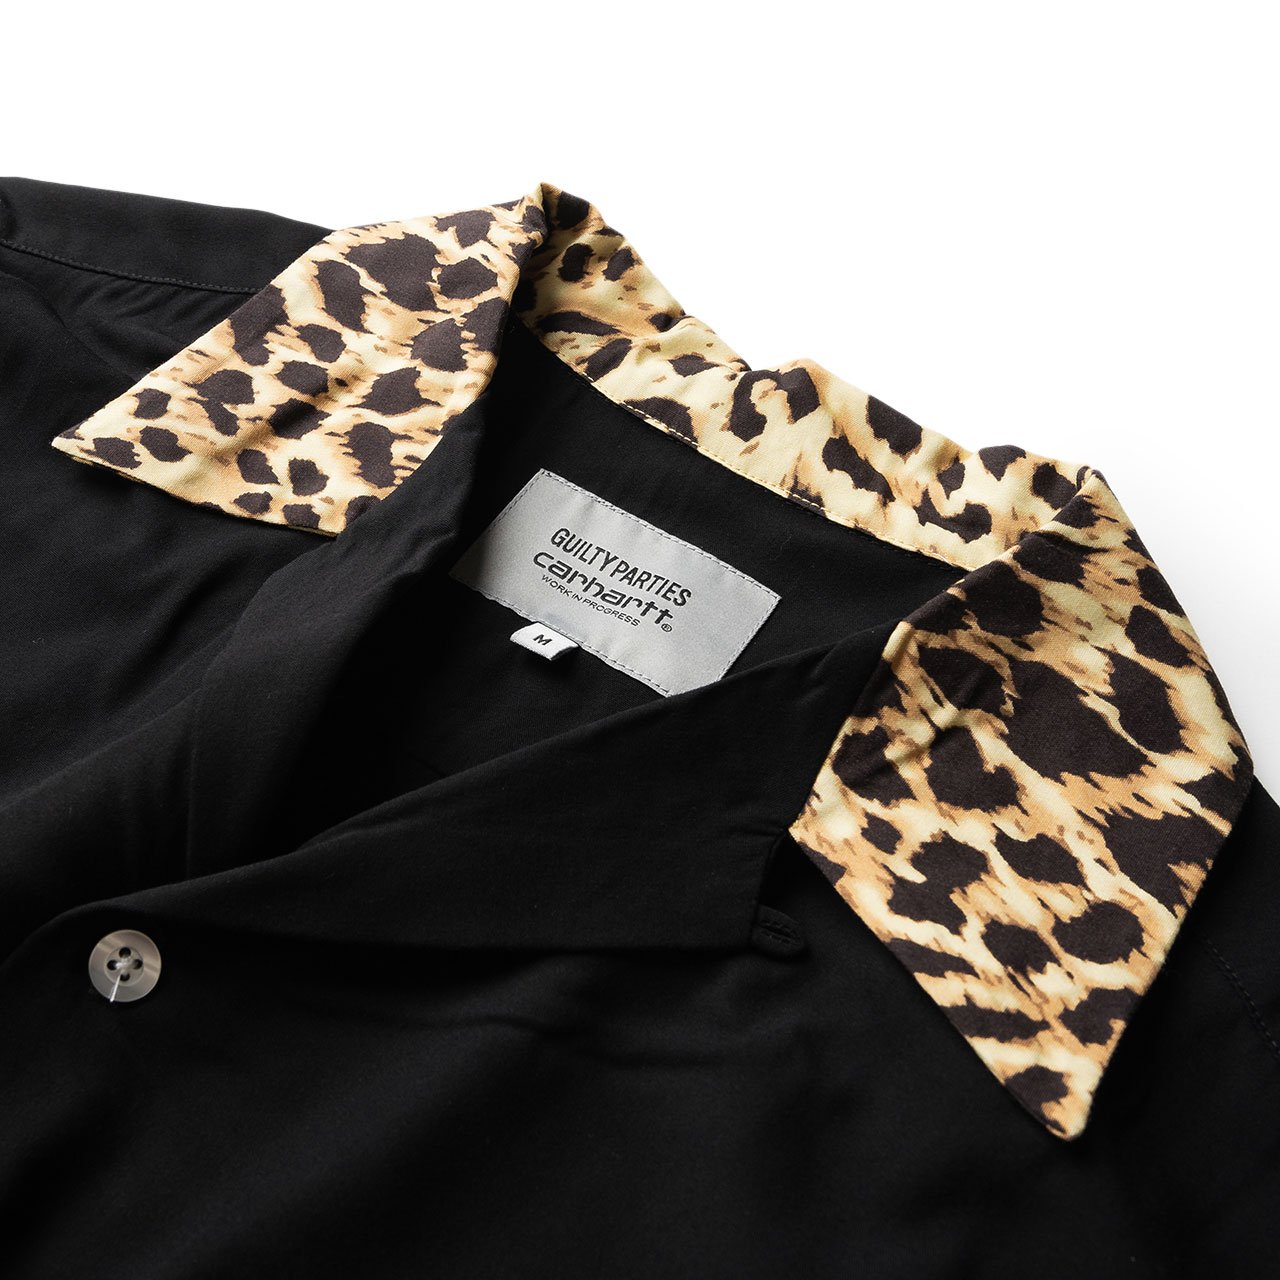 carhartt wip x wacko maria 50's shirt (black / leopard print) - i028240.0d6.90.03 - a.plus - Image - 3